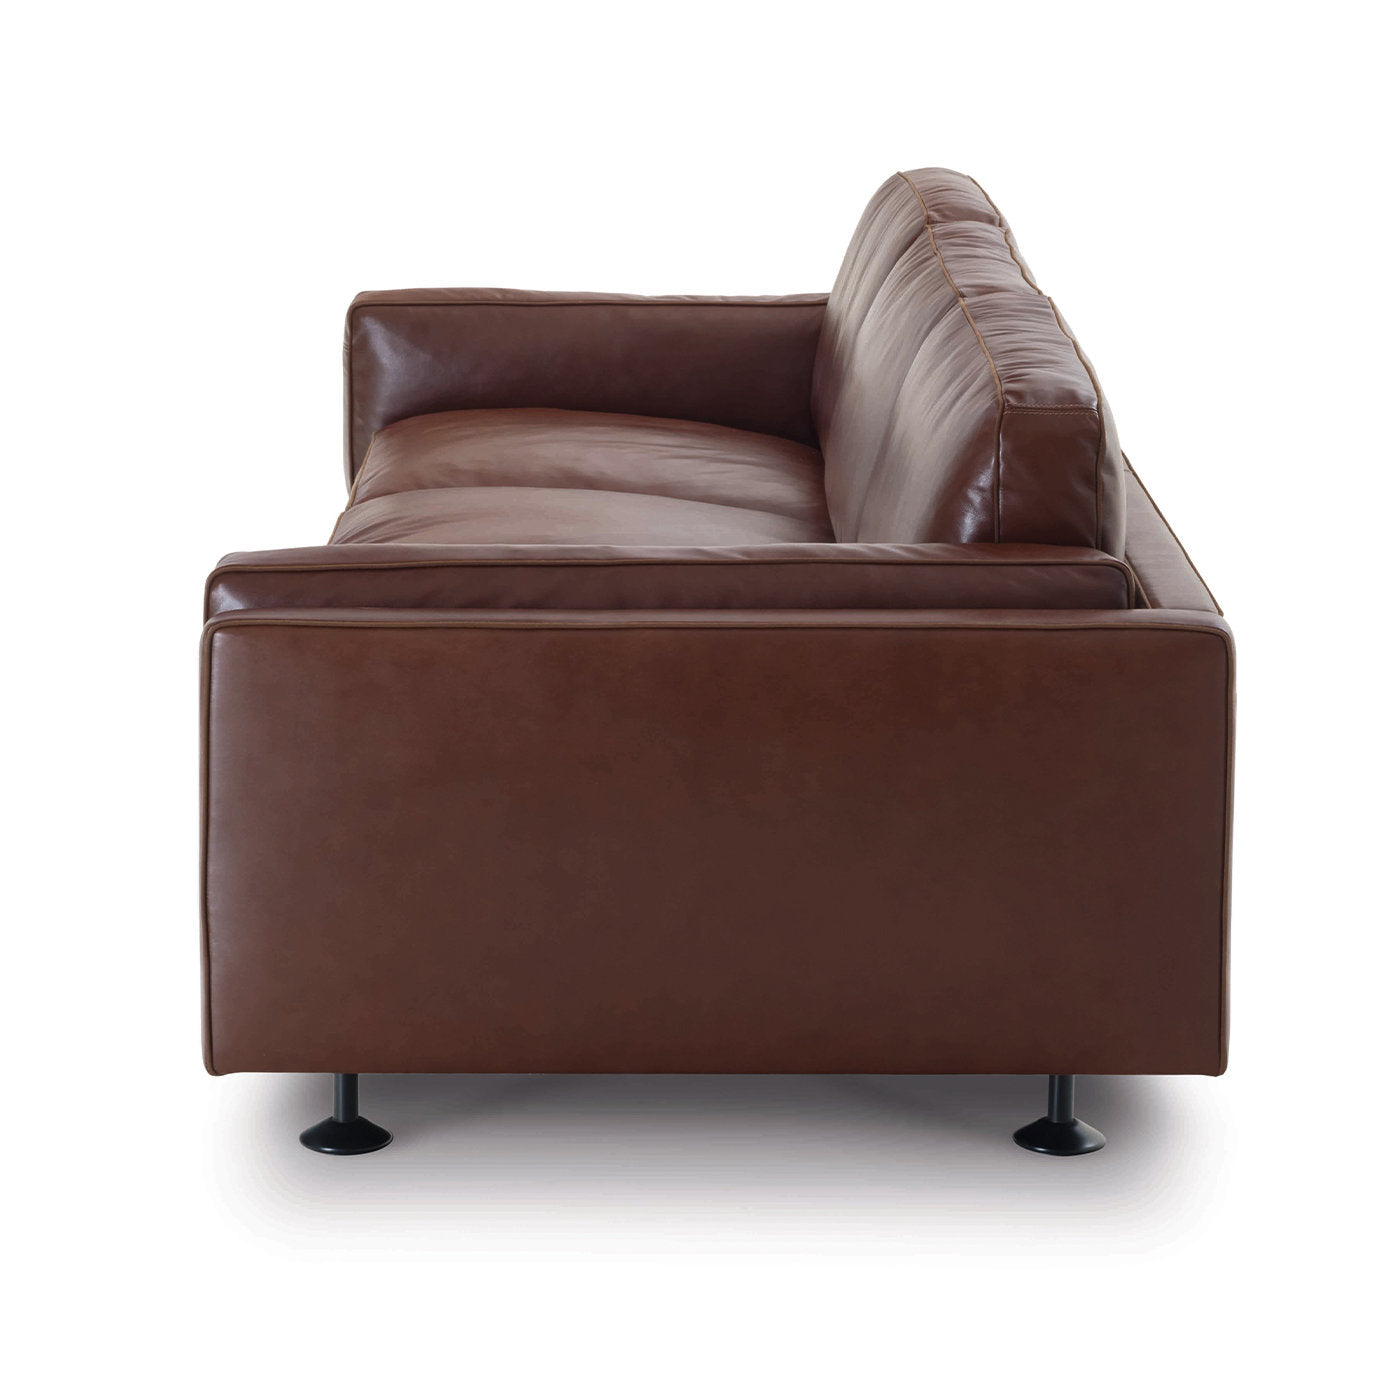 Quinto leather sofa - Alternative view 3